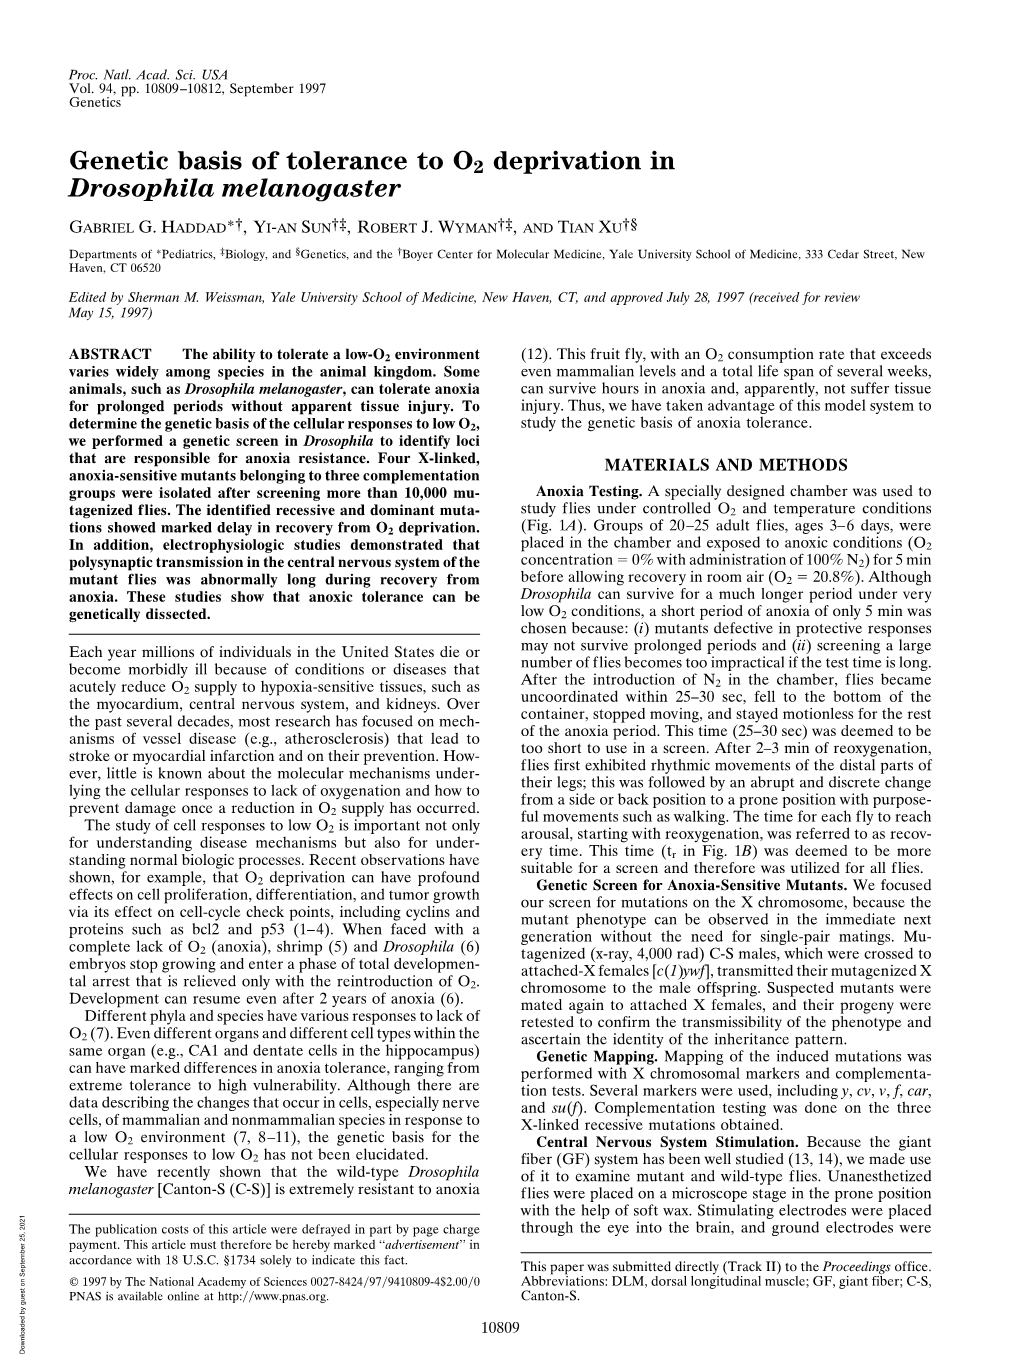 Genetic Basis of Tolerance to O2 Deprivation in Drosophila Melanogaster